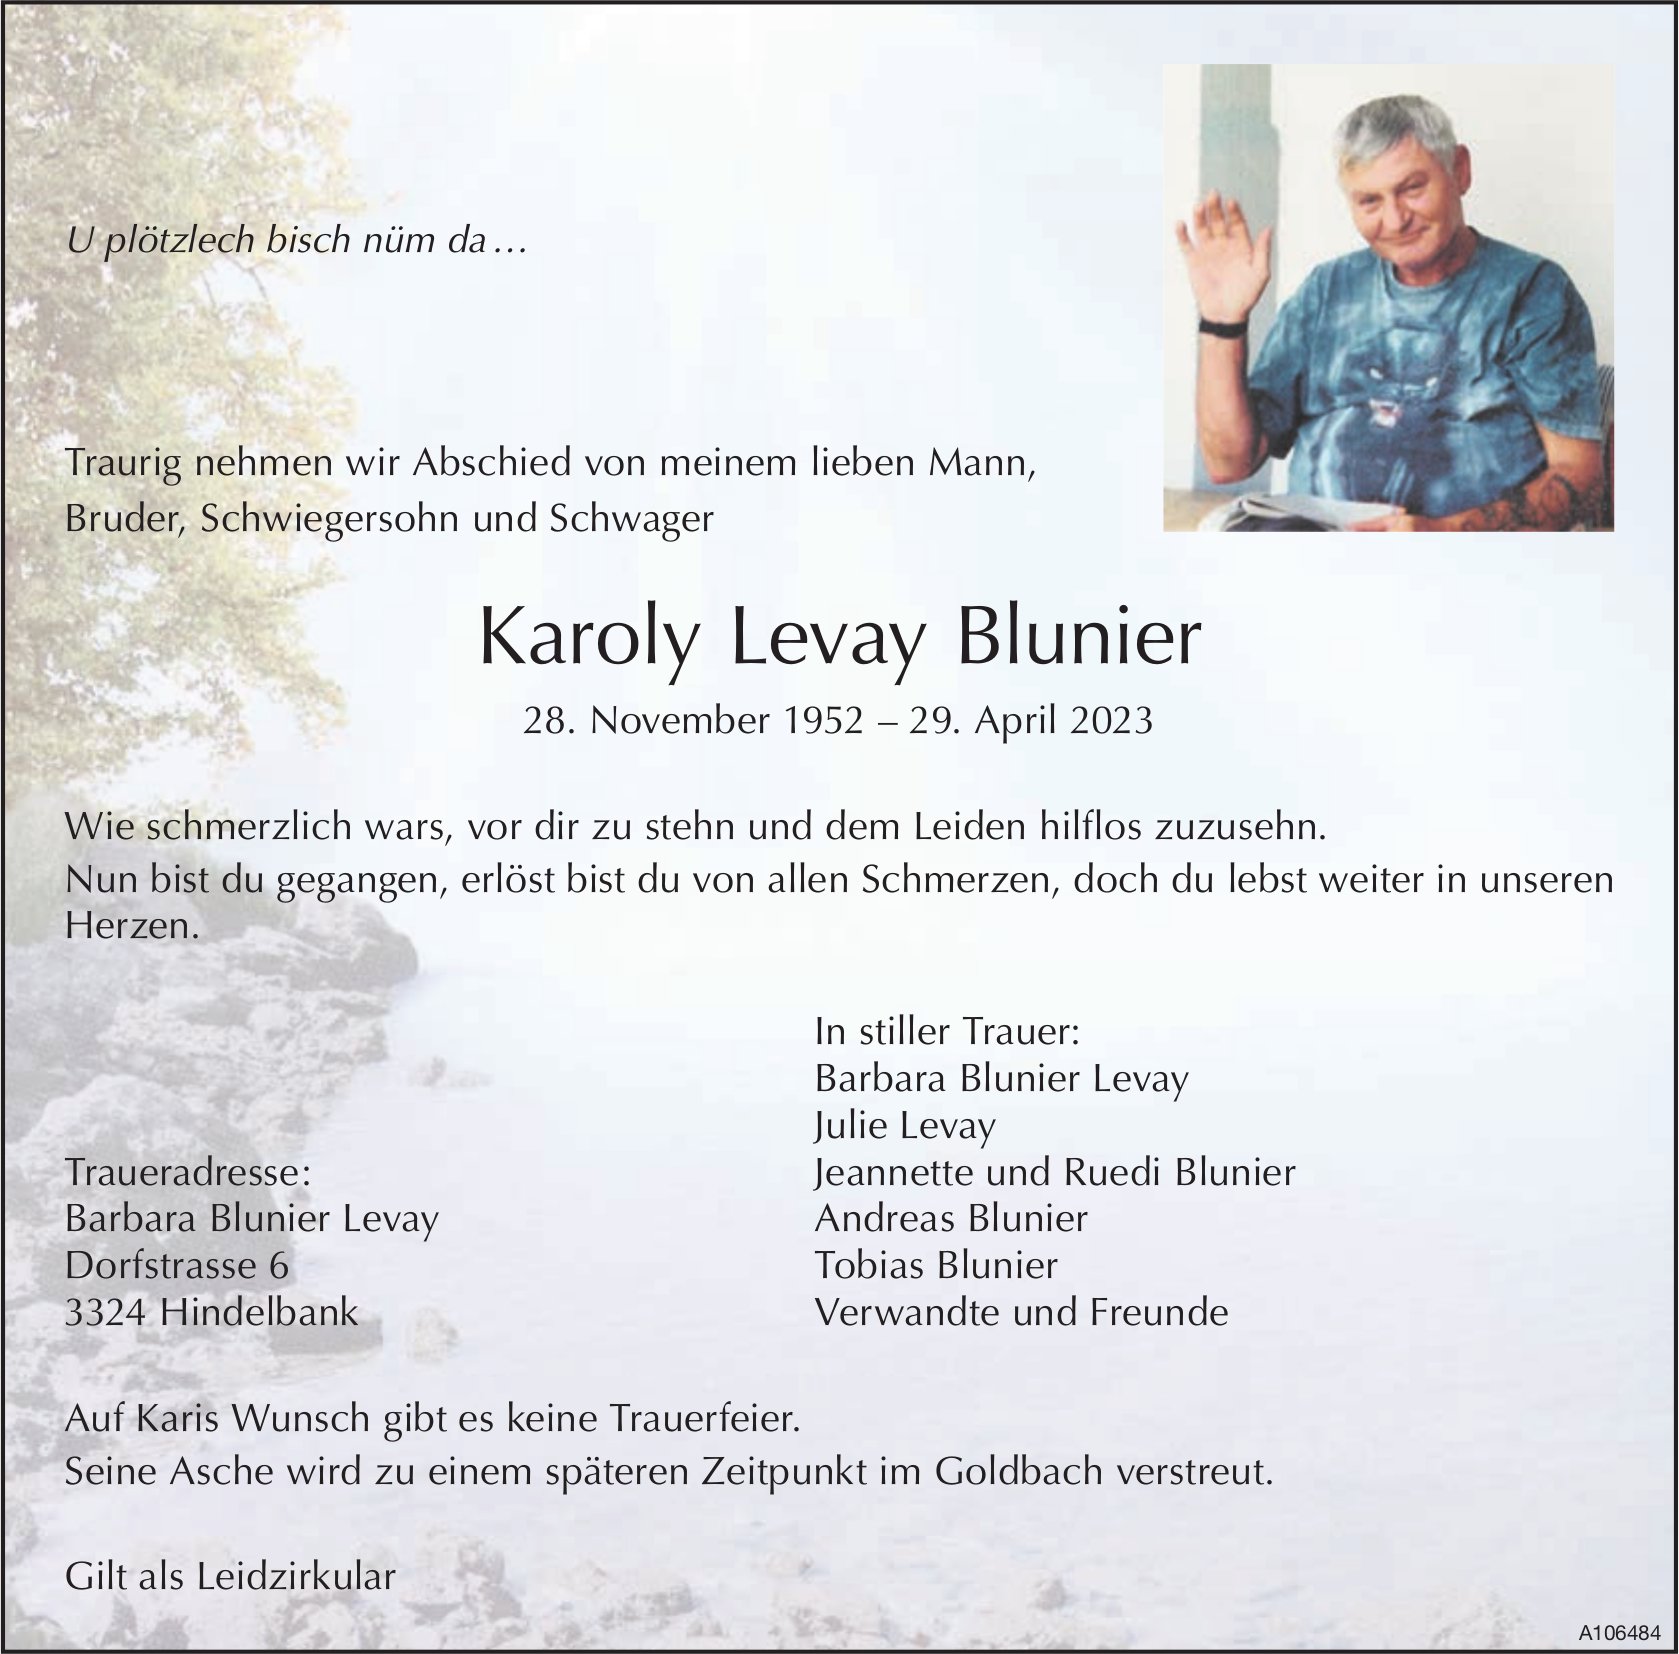 Karoly Levay Blunier, April 2023 / TA